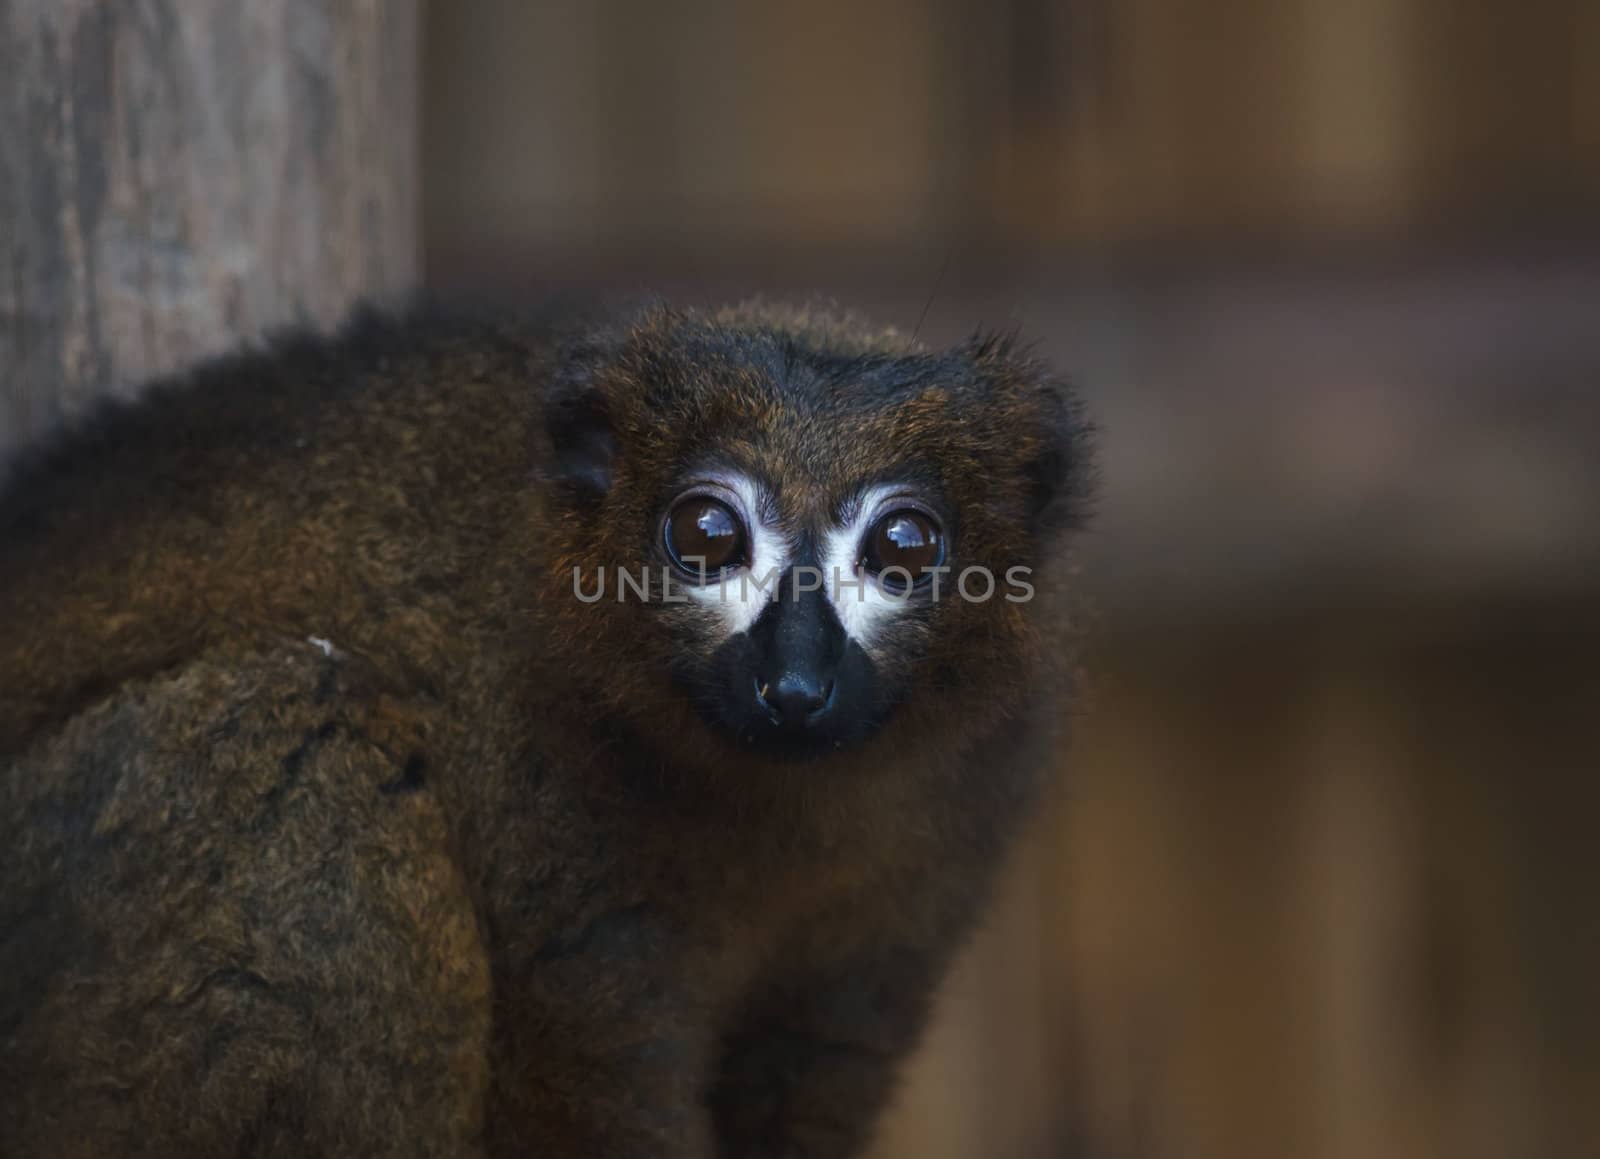 The Red-bellied Lemur by njaj